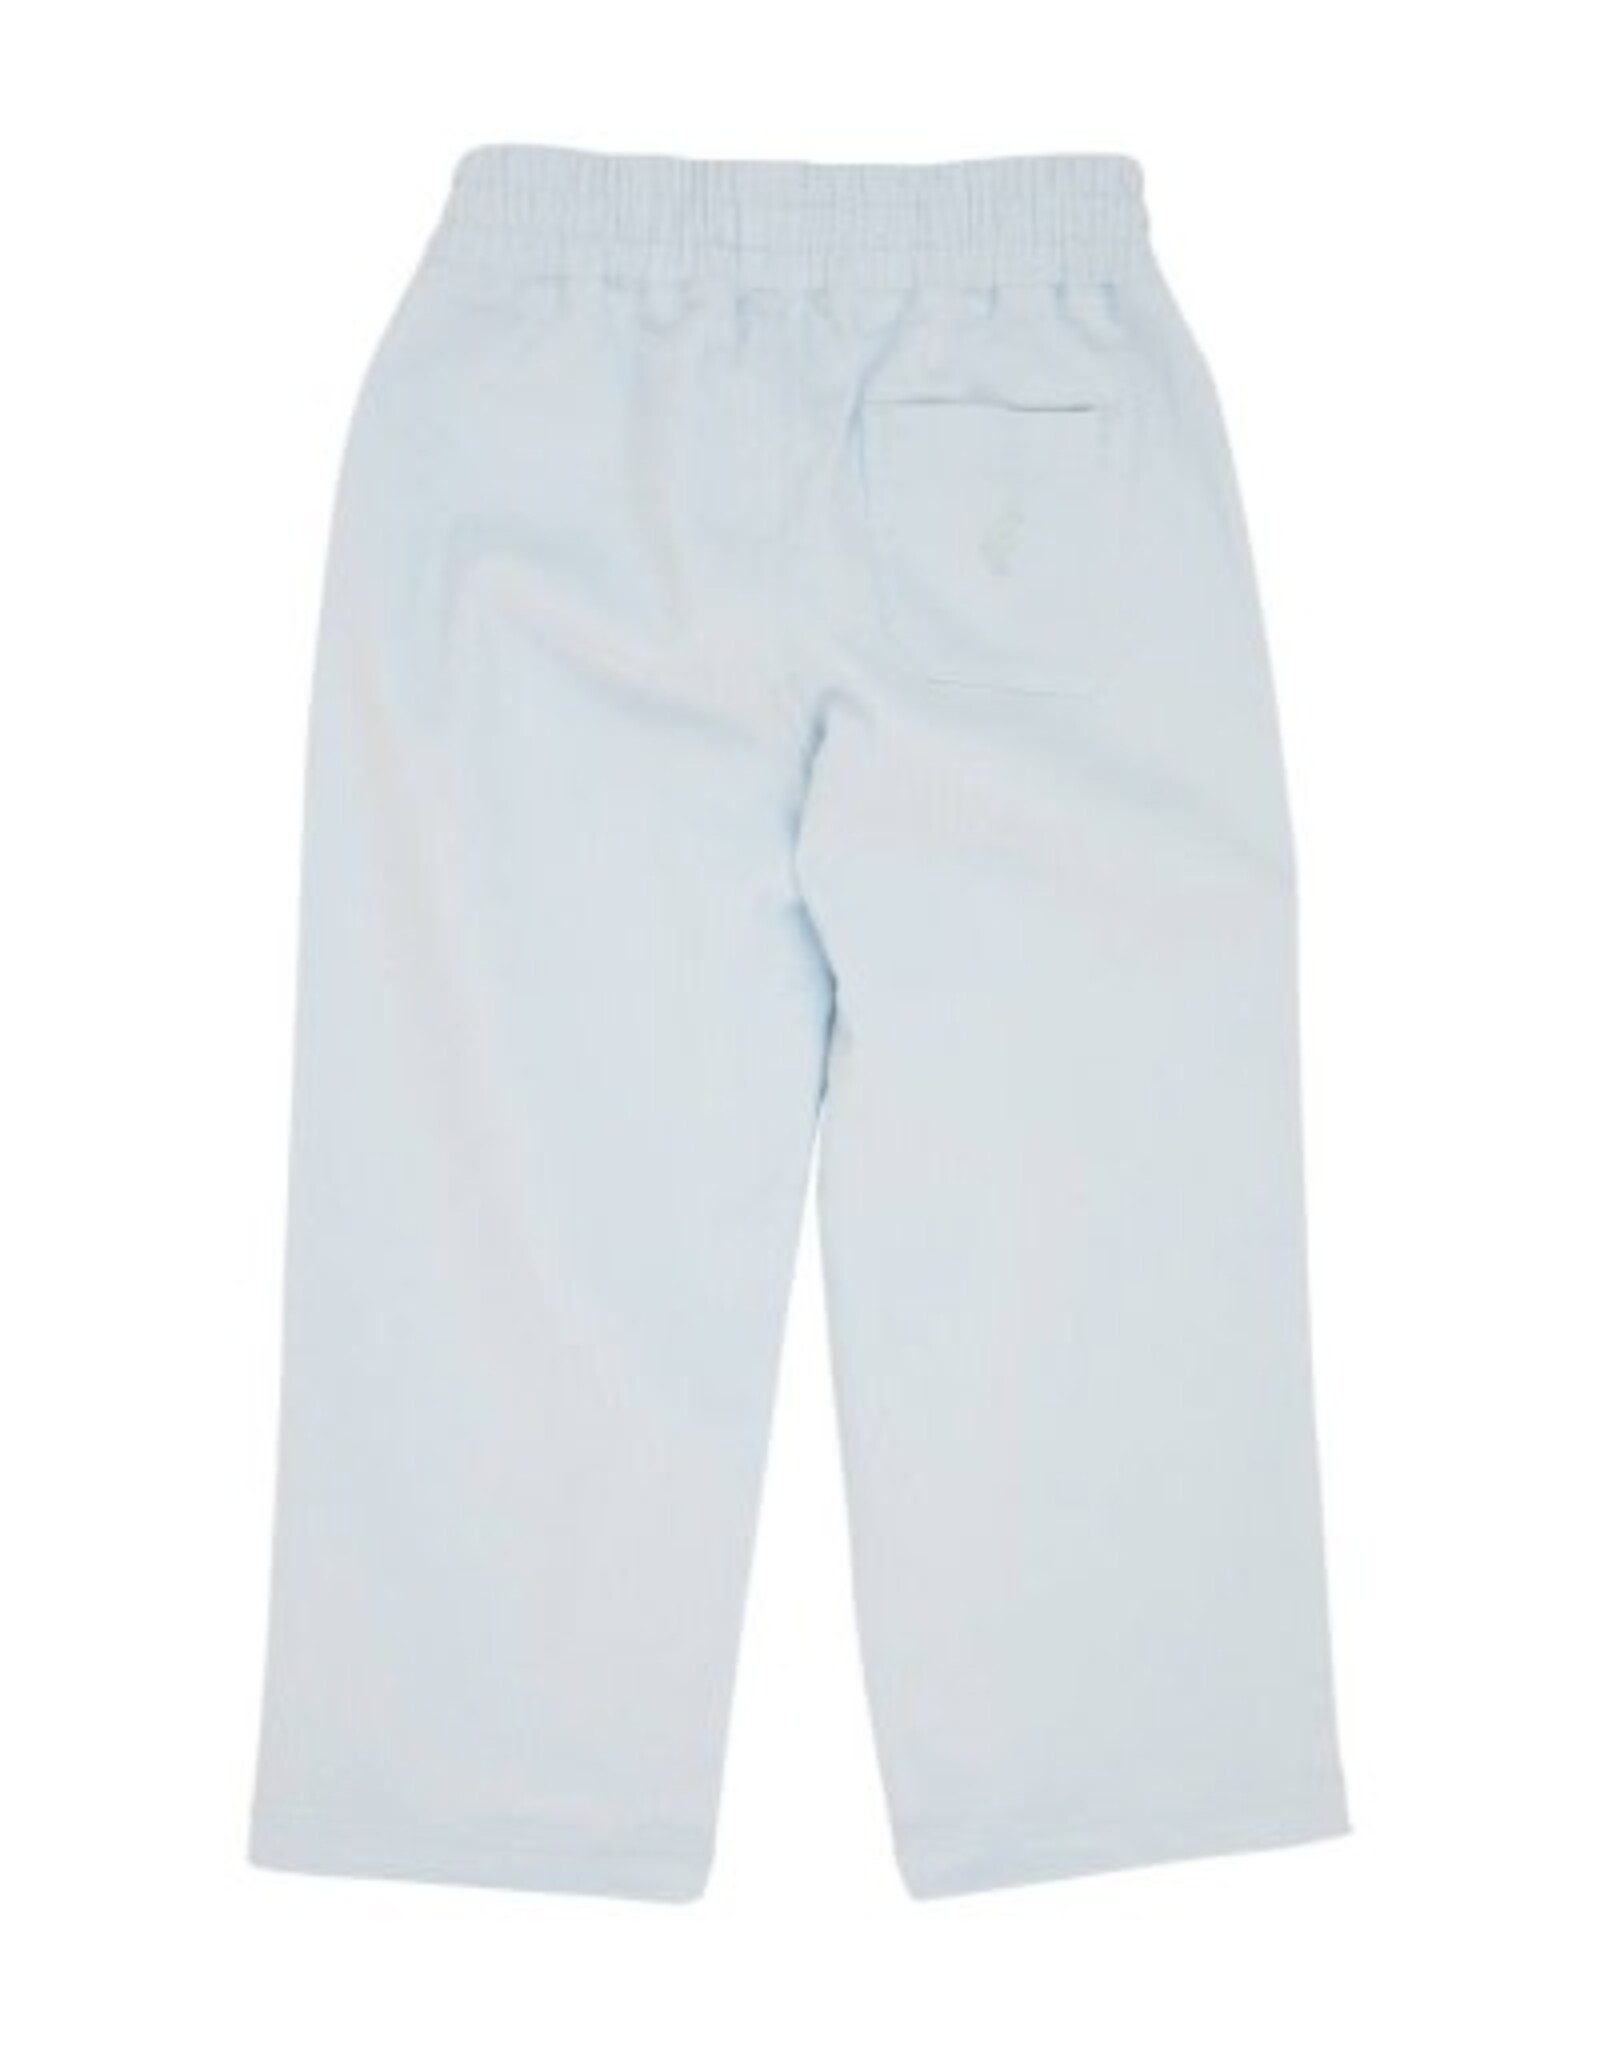 The Beaufort Bonnet Company Sheffield Pants, Buckhead Blue Corduroy